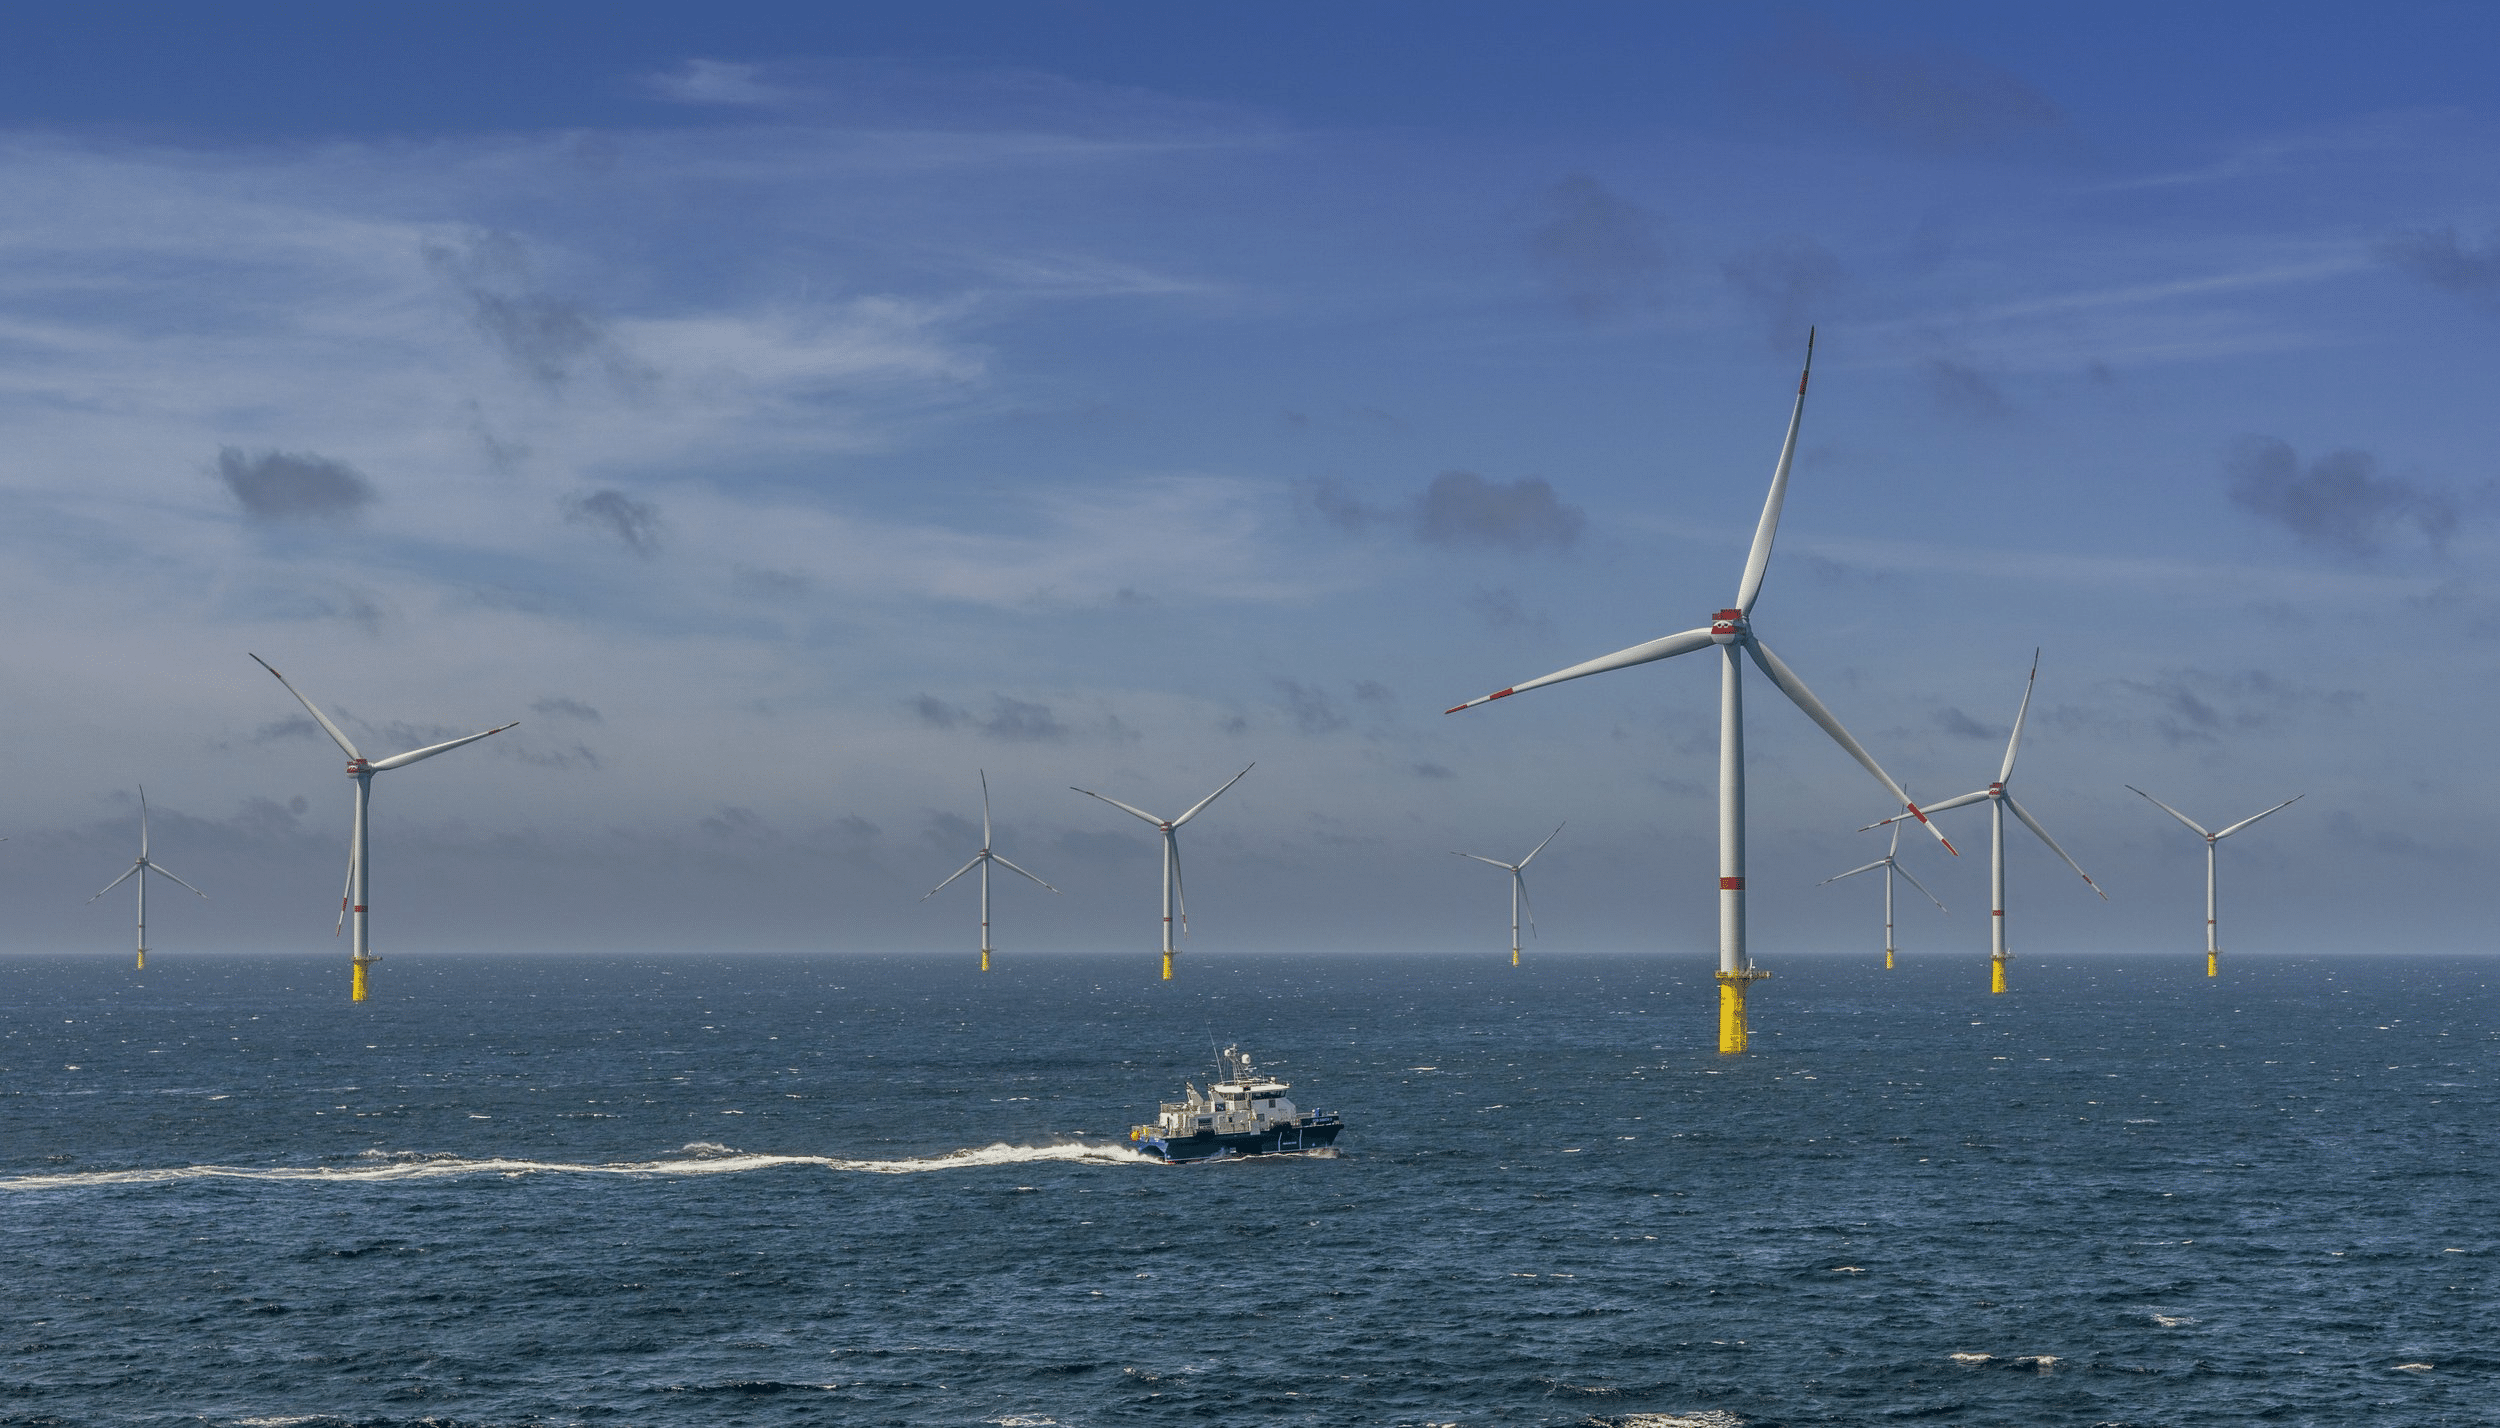 Australia proposes fifth area for offshore wind development